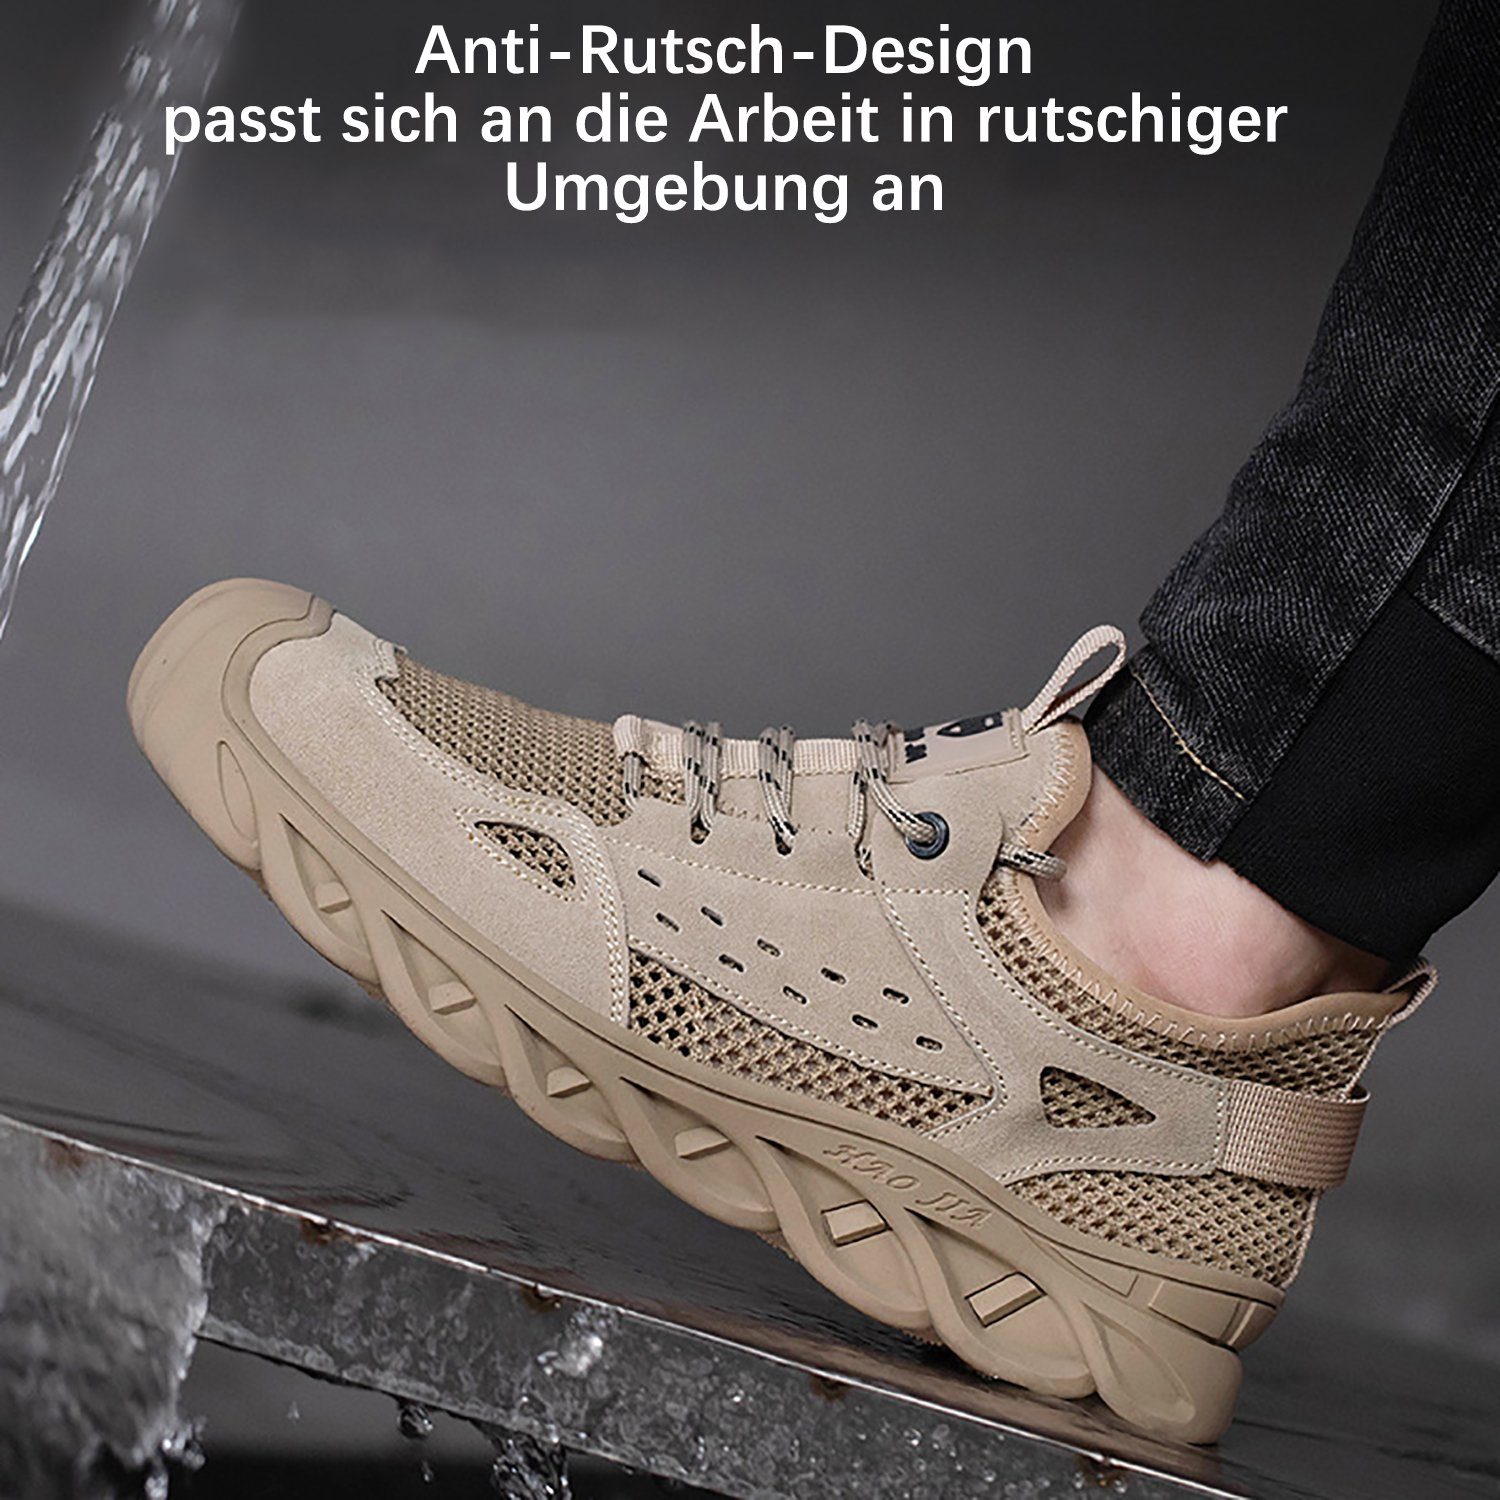 Daisred Arbeitsschuhe Sportlich Schutzschuhe leichte Grau Sicherheitsschuh Sneaker